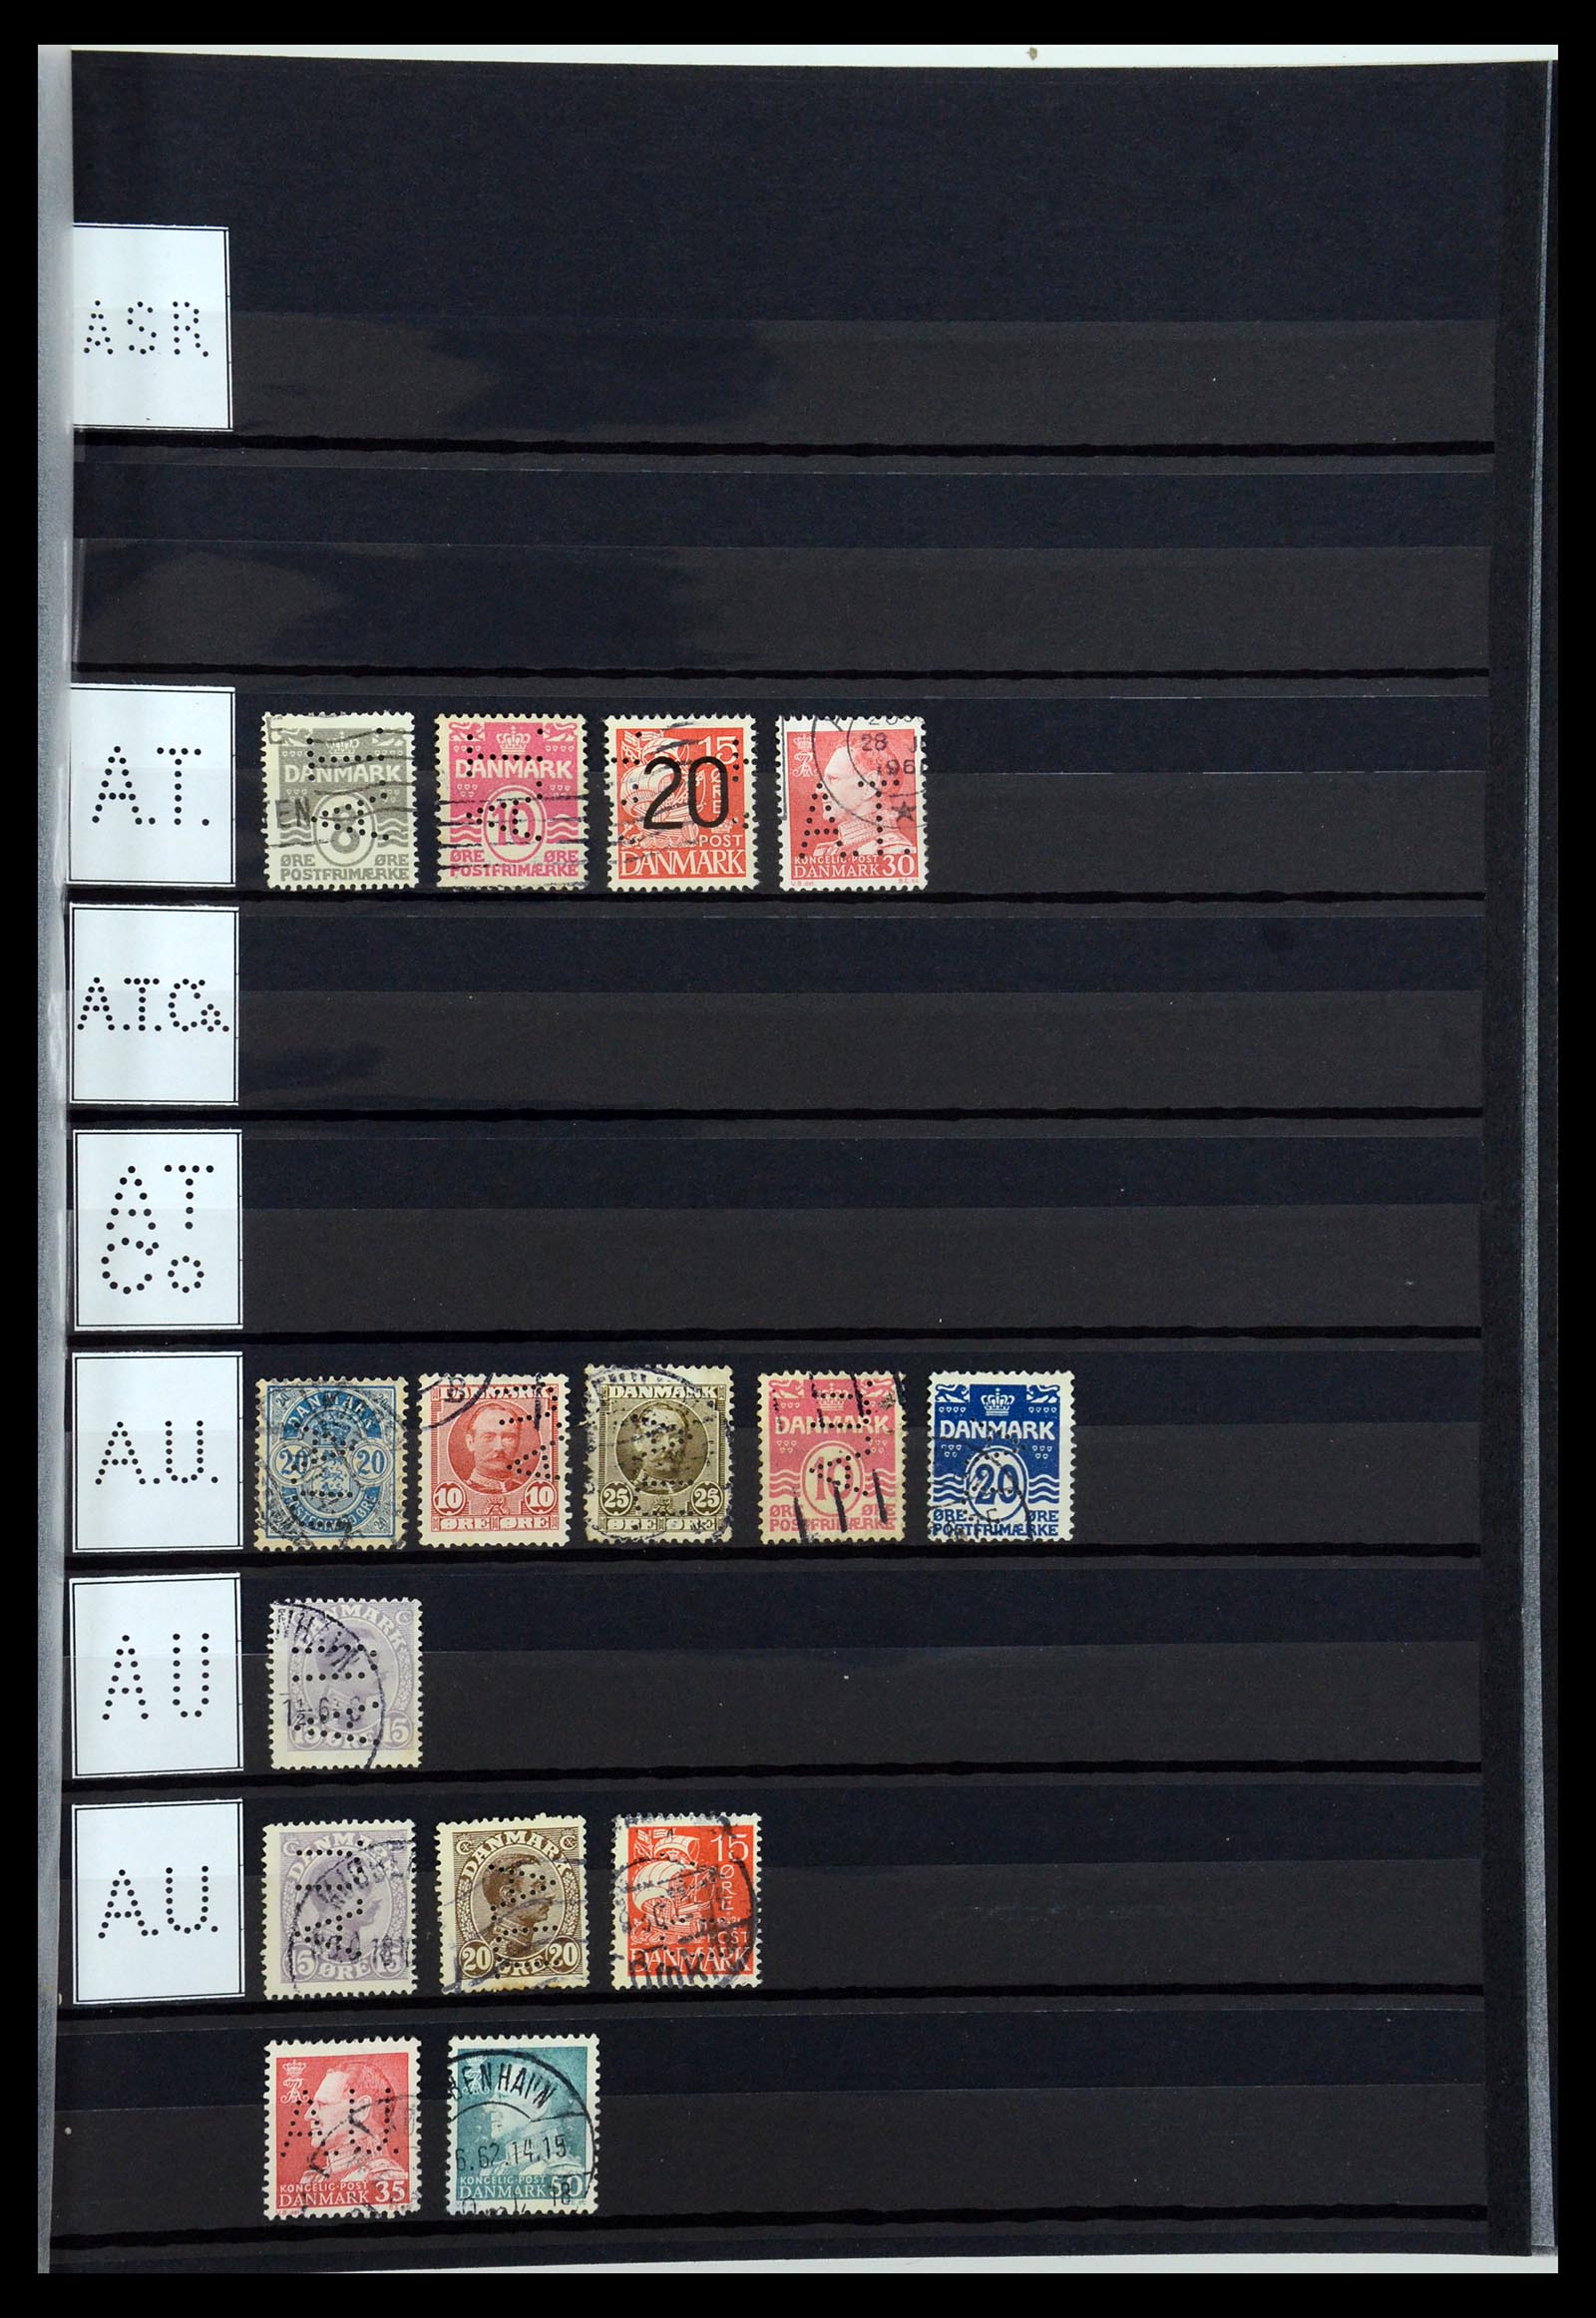 36396 011 - Stamp collection 36396 Denmark perfins.